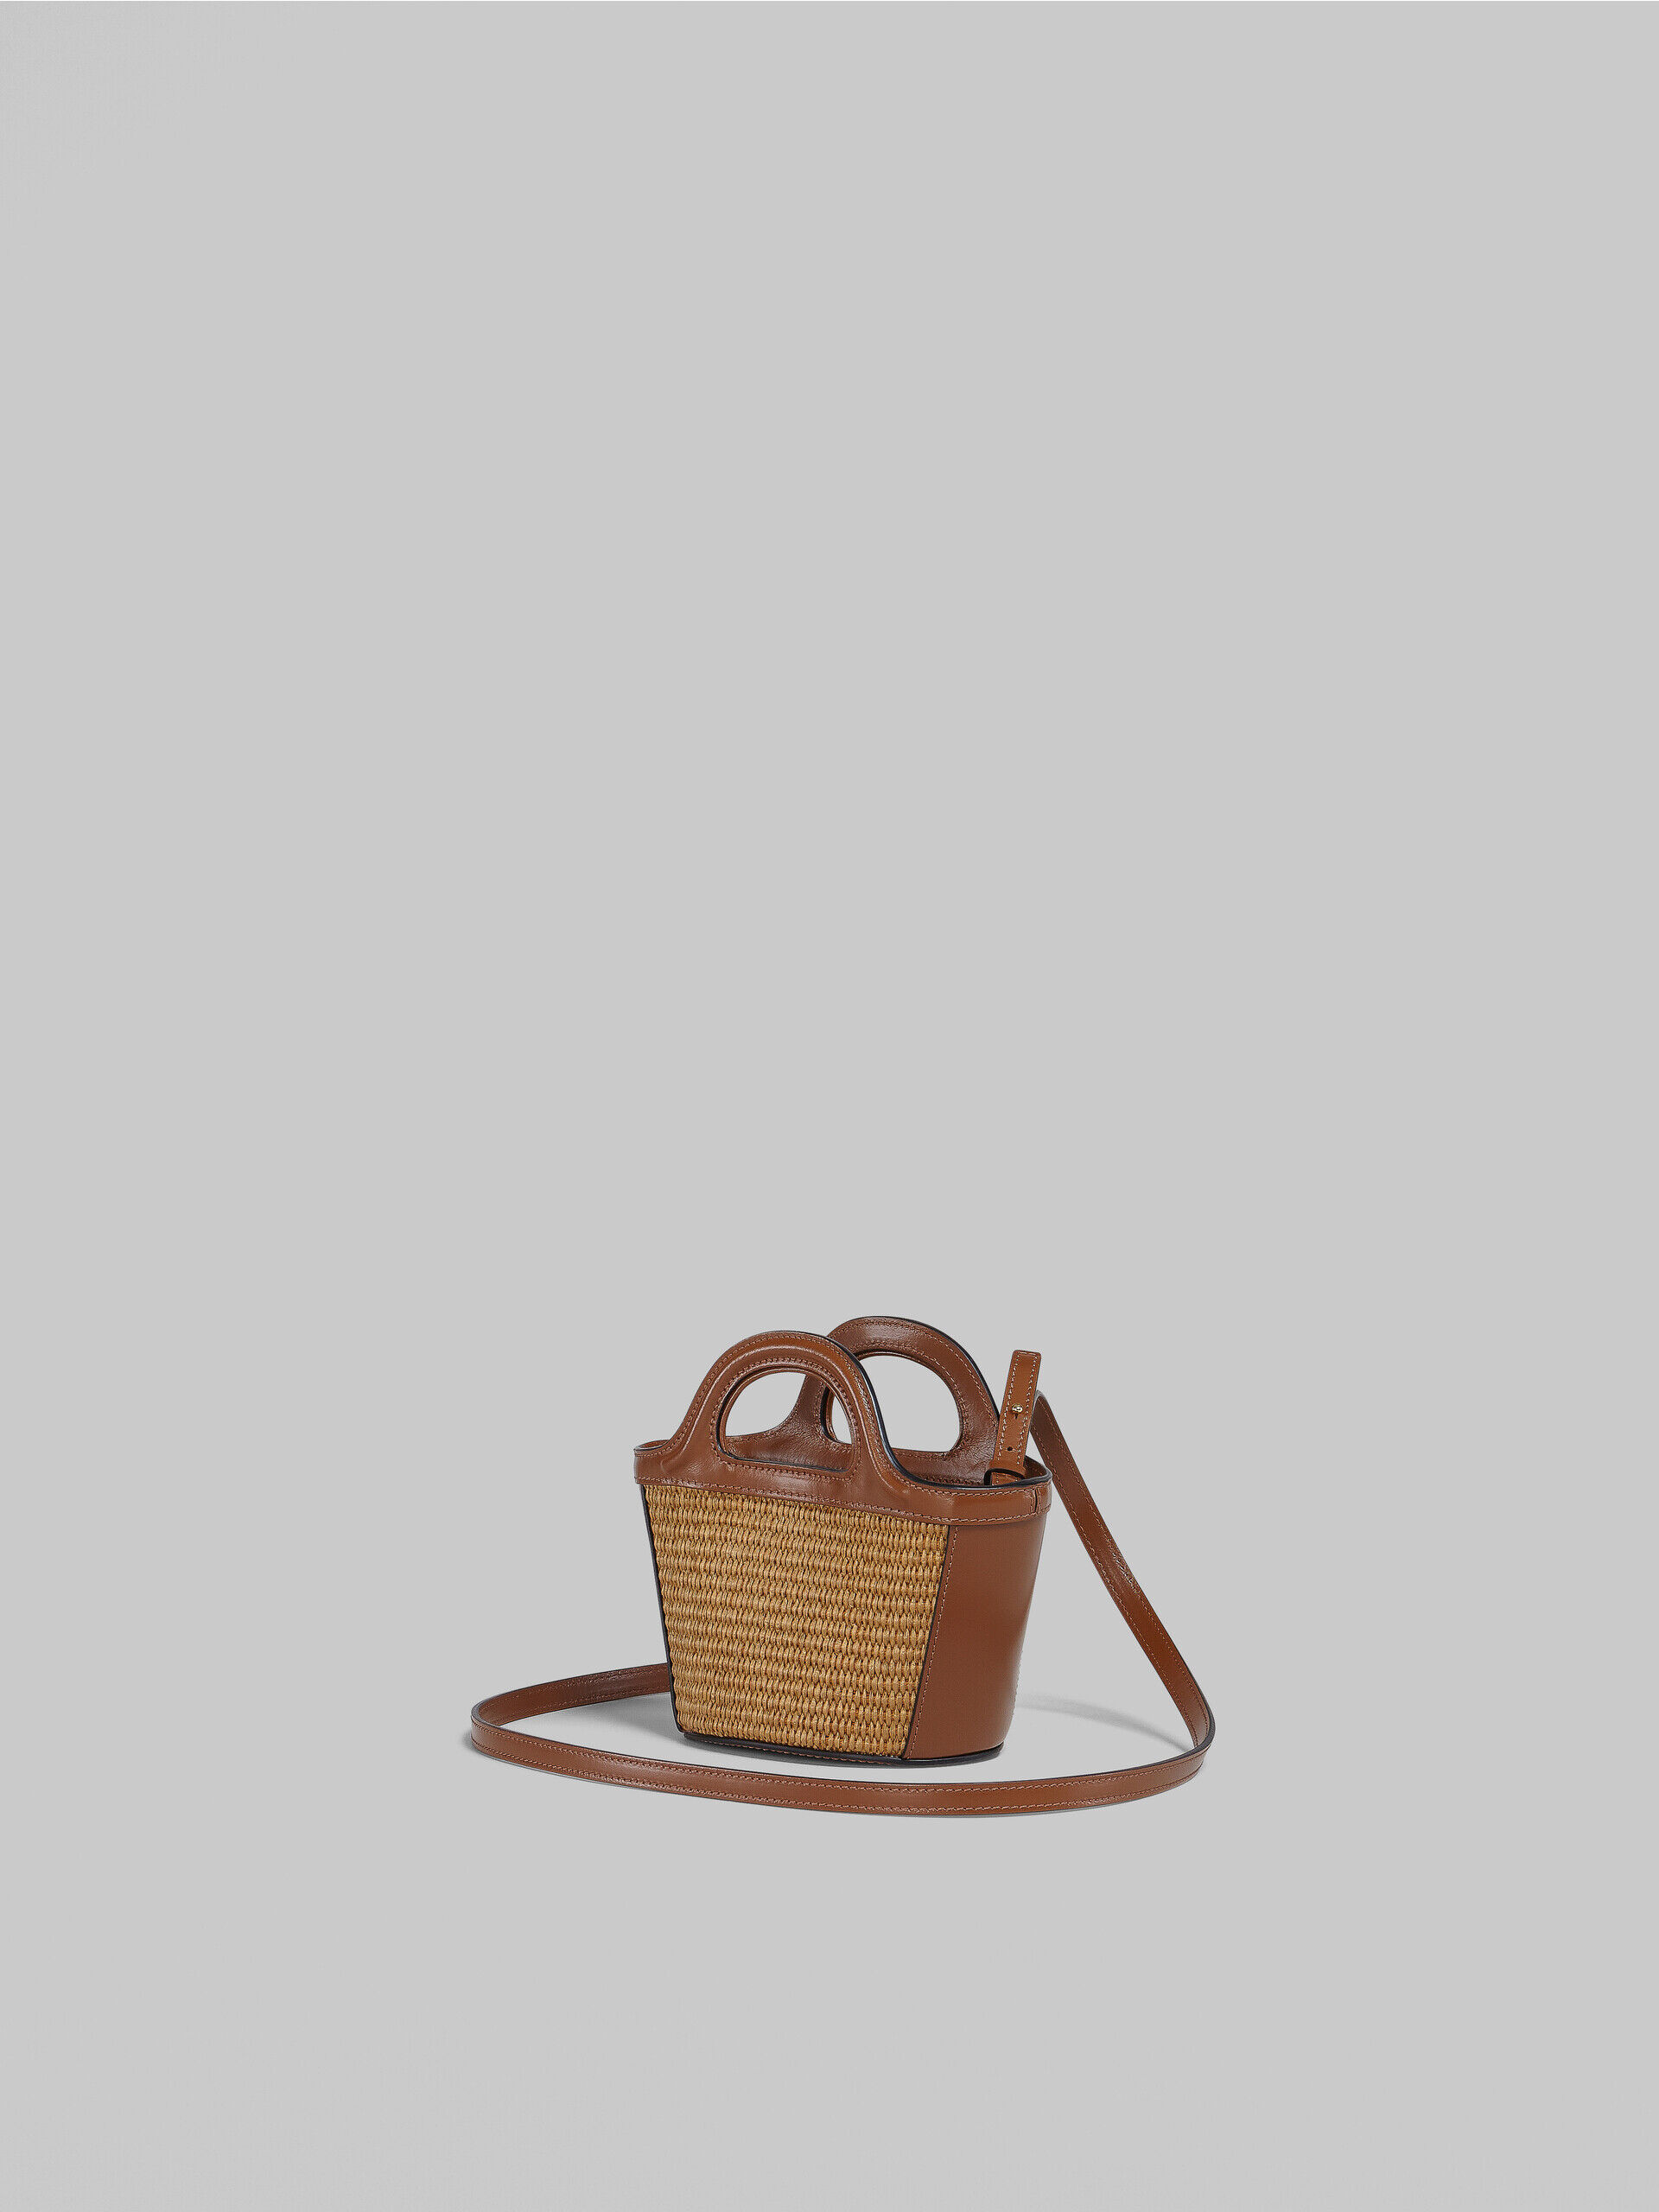 Tropicalia Micro Bag in brown leather and raffia | Marni